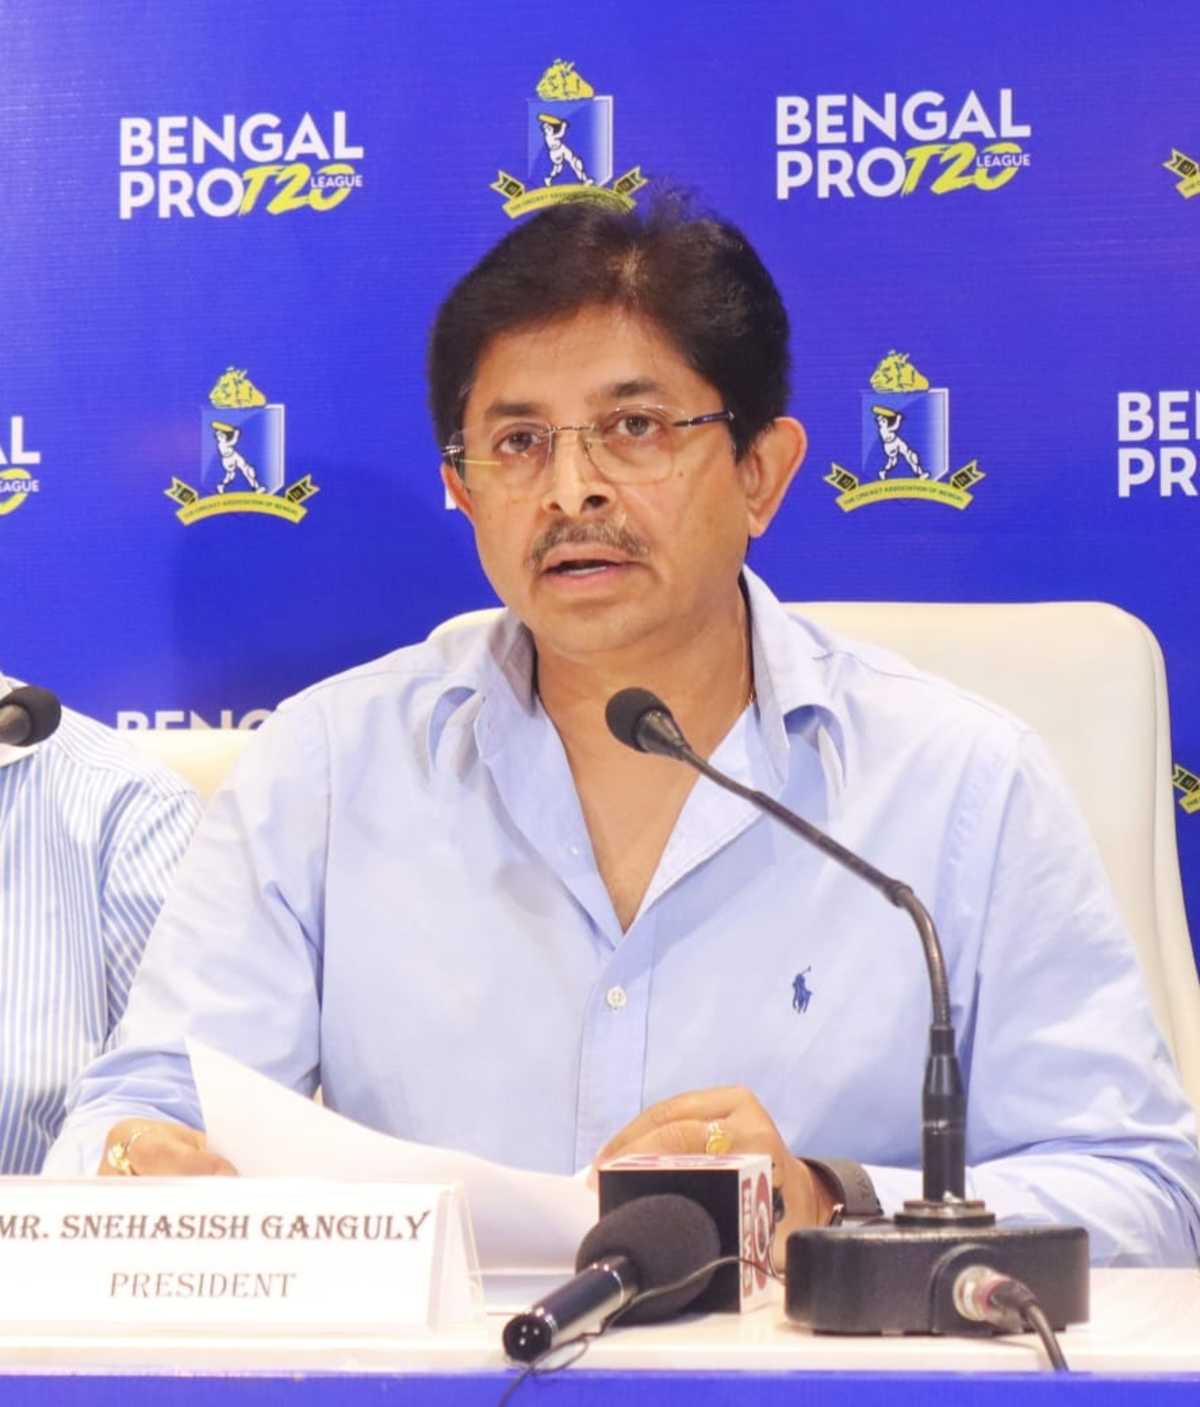 Snehasish Ganguly addresses a press gathering